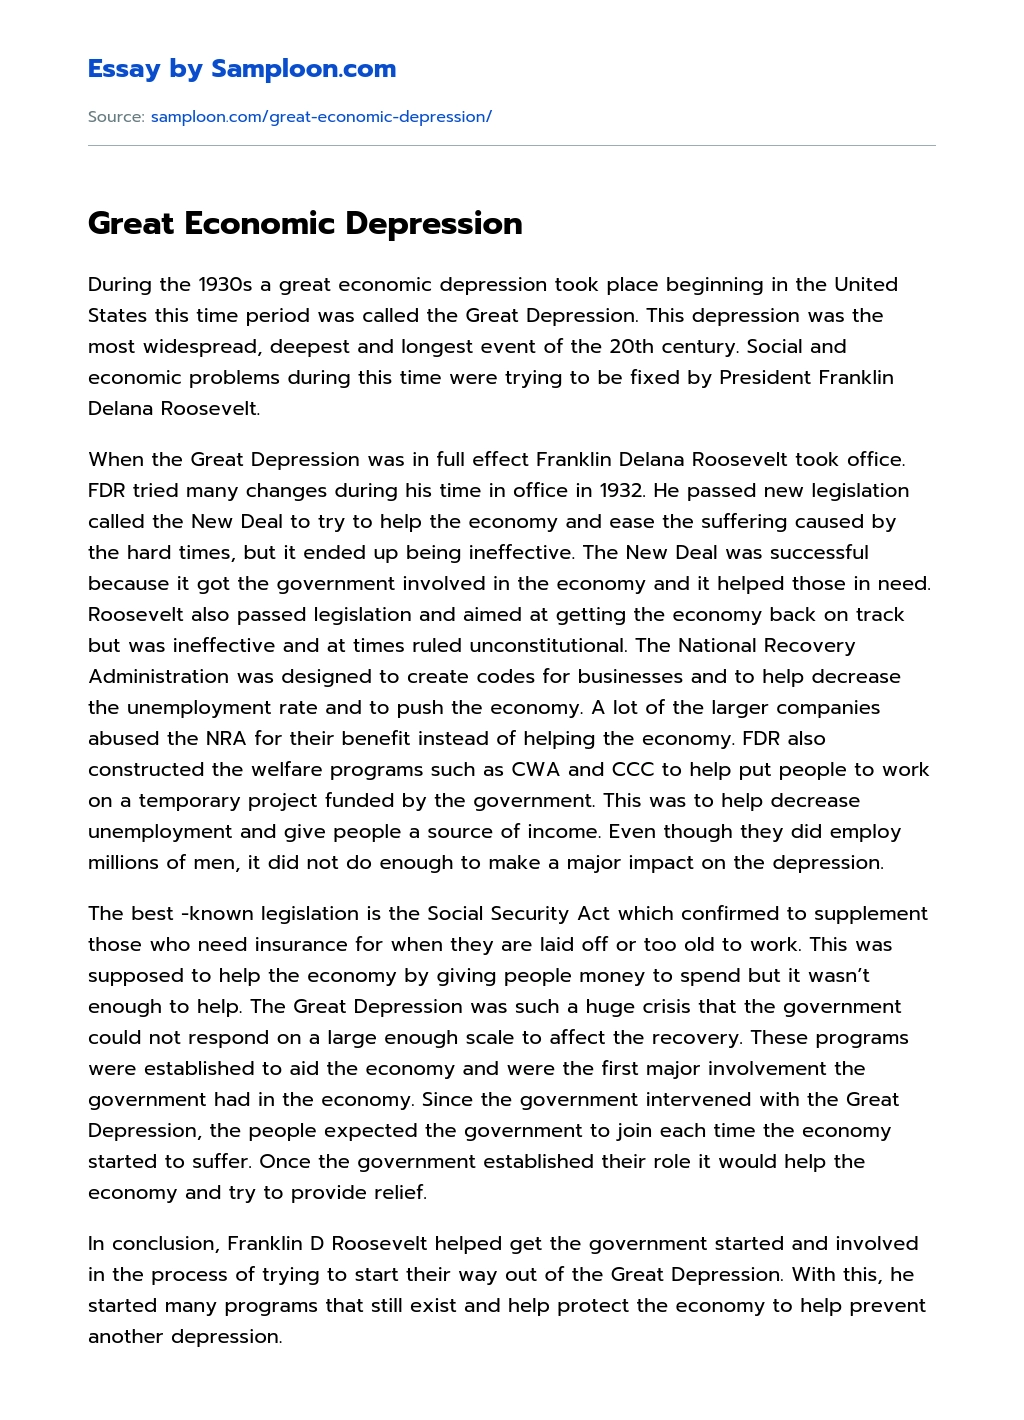 Great Economic Depression essay